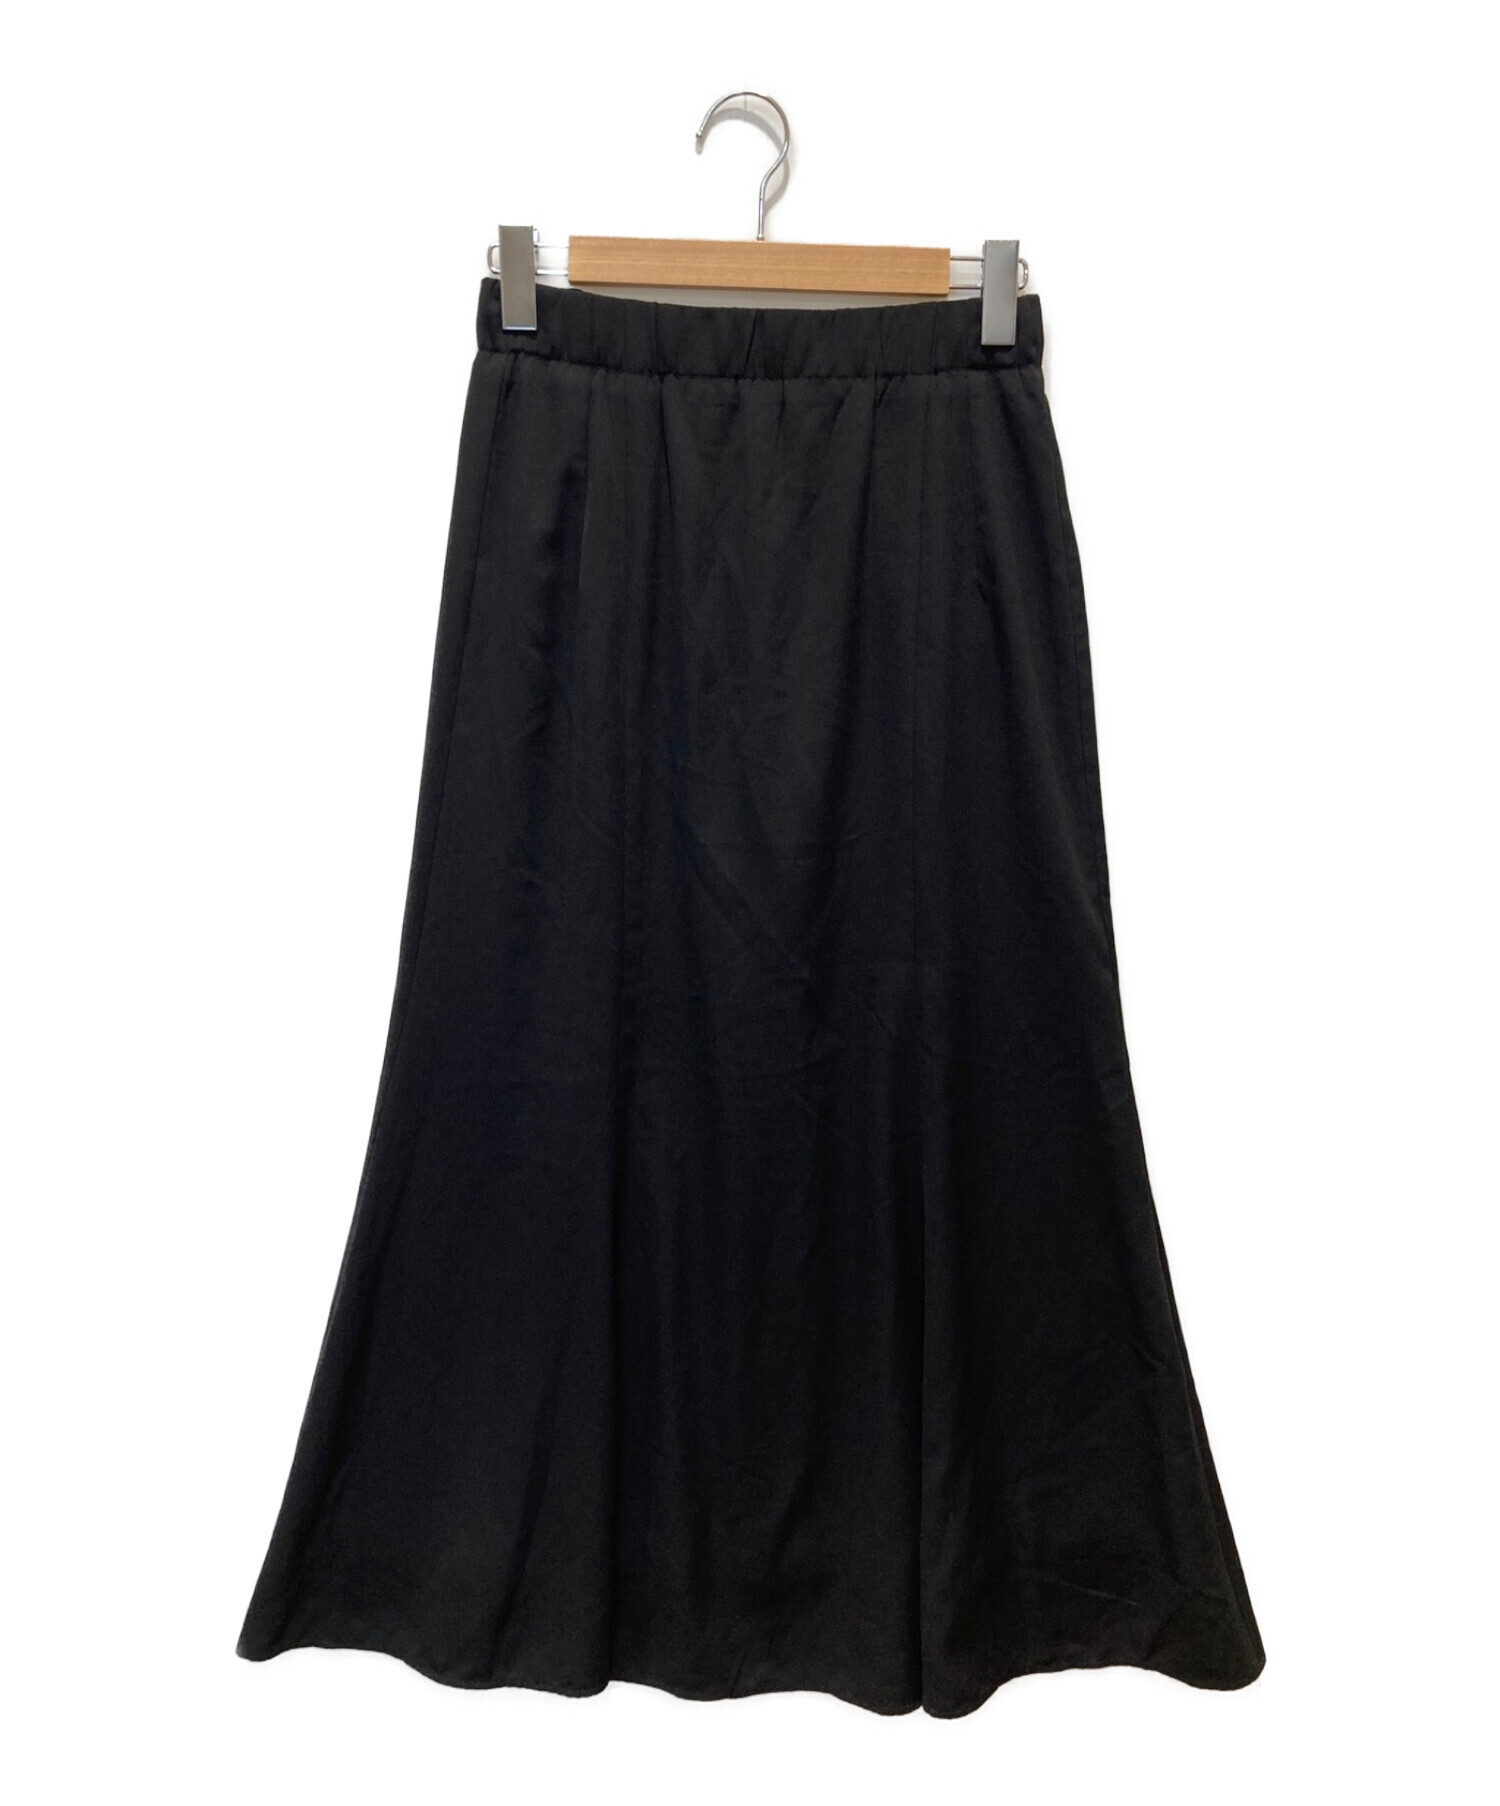 emmi atelier (エミアトリエ) リラックスナロースカート ブラック サイズ:1 未使用品